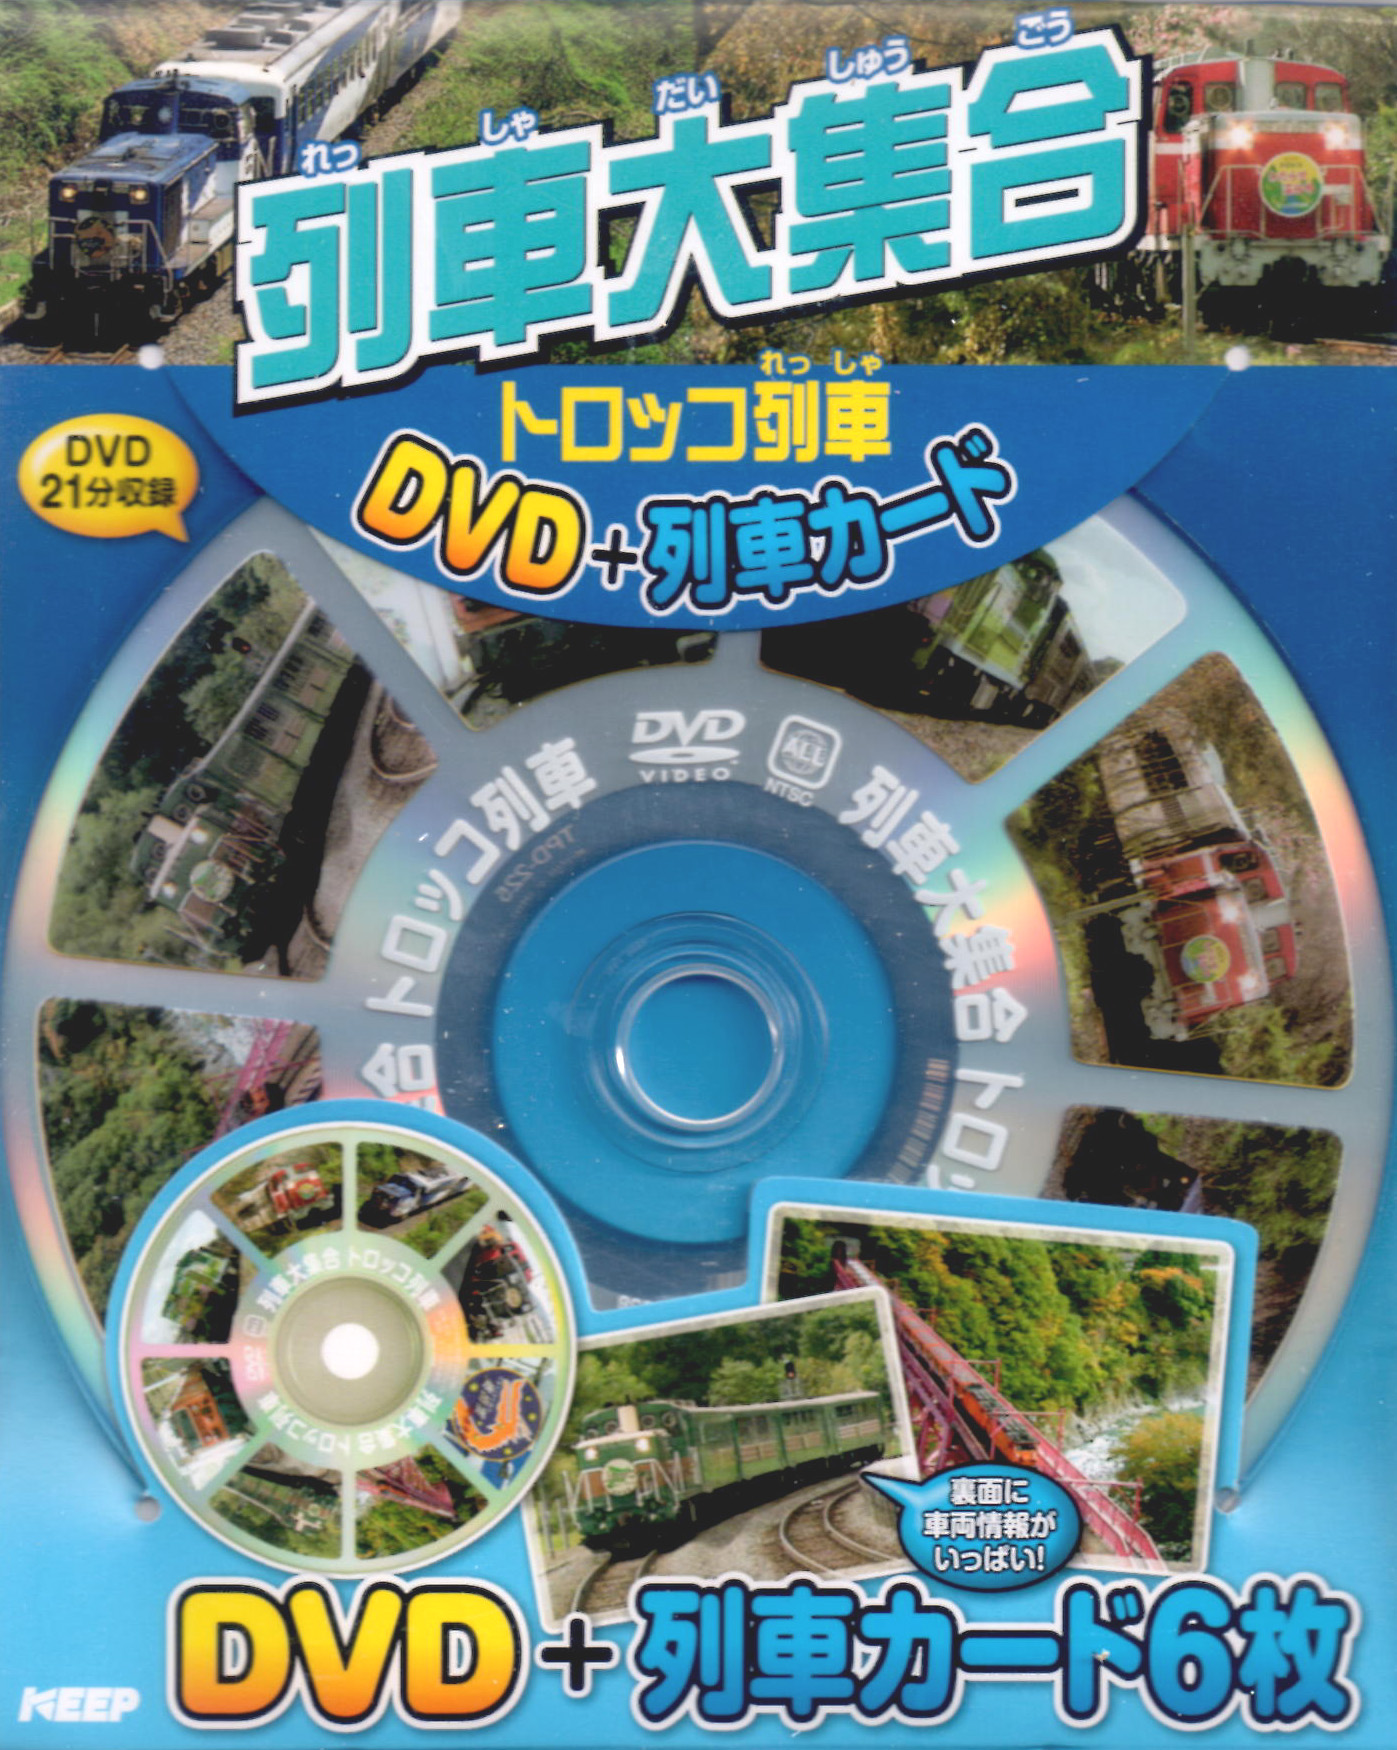 KEEP株式会社／列車大集合 トロッコ列車 (DVD+列車カード)